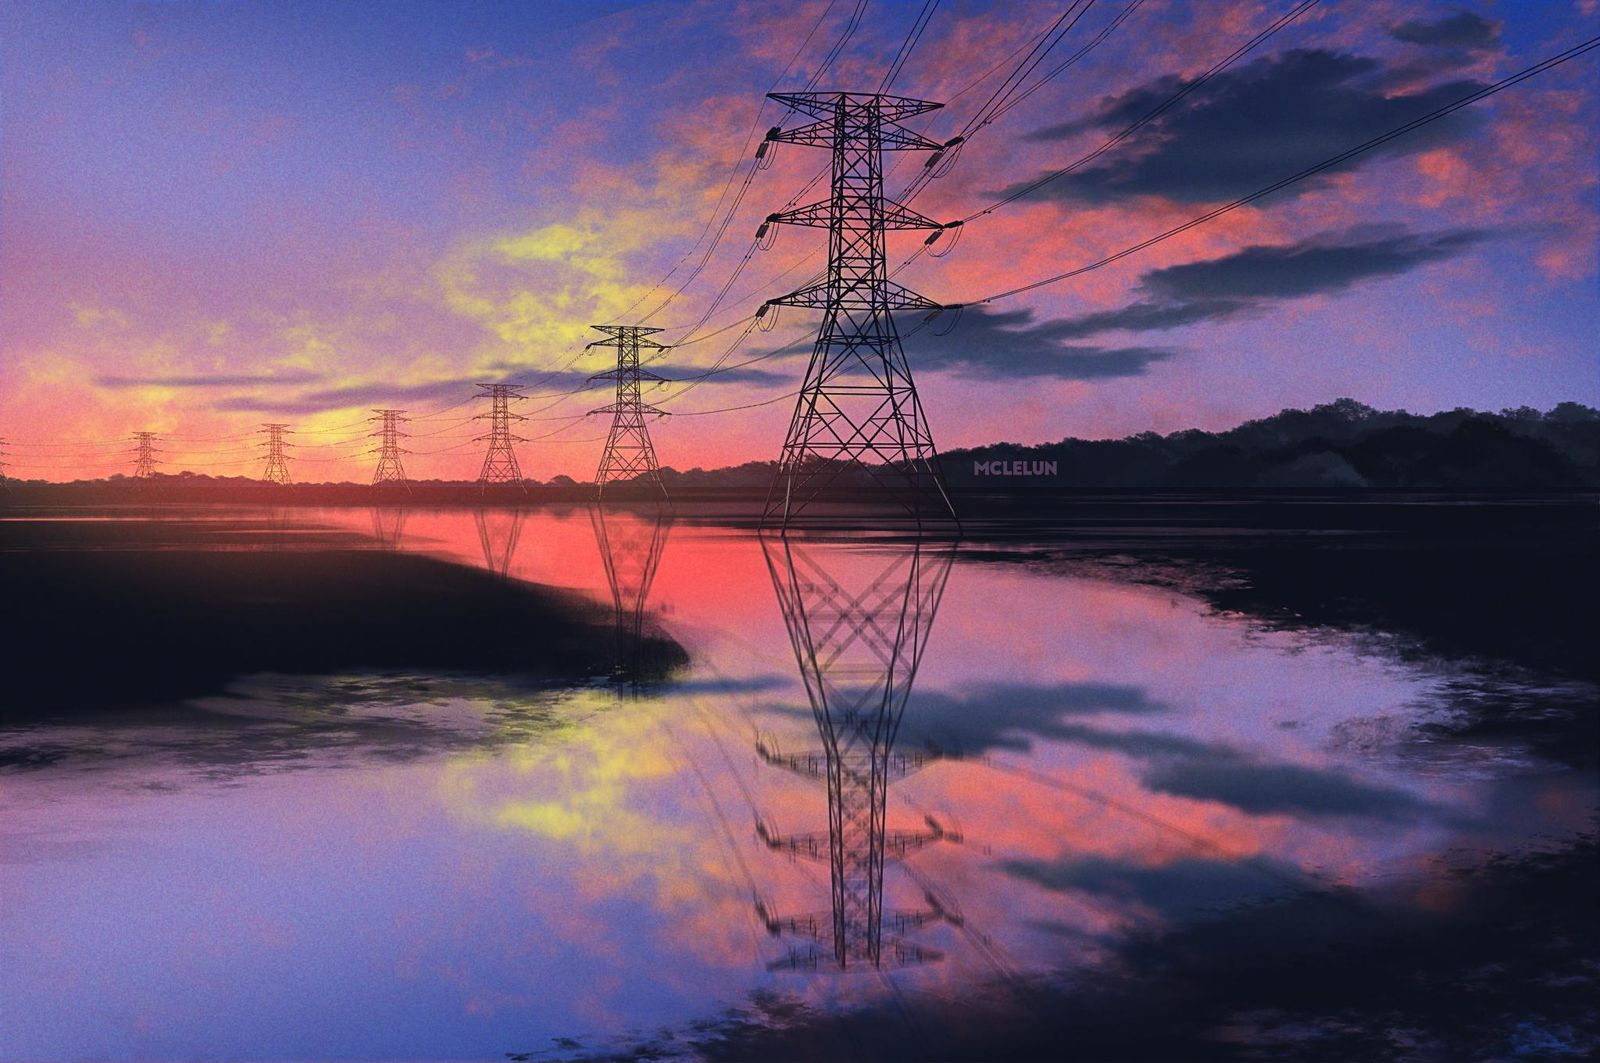 Electricity Pylon Reflection插画图片壁纸